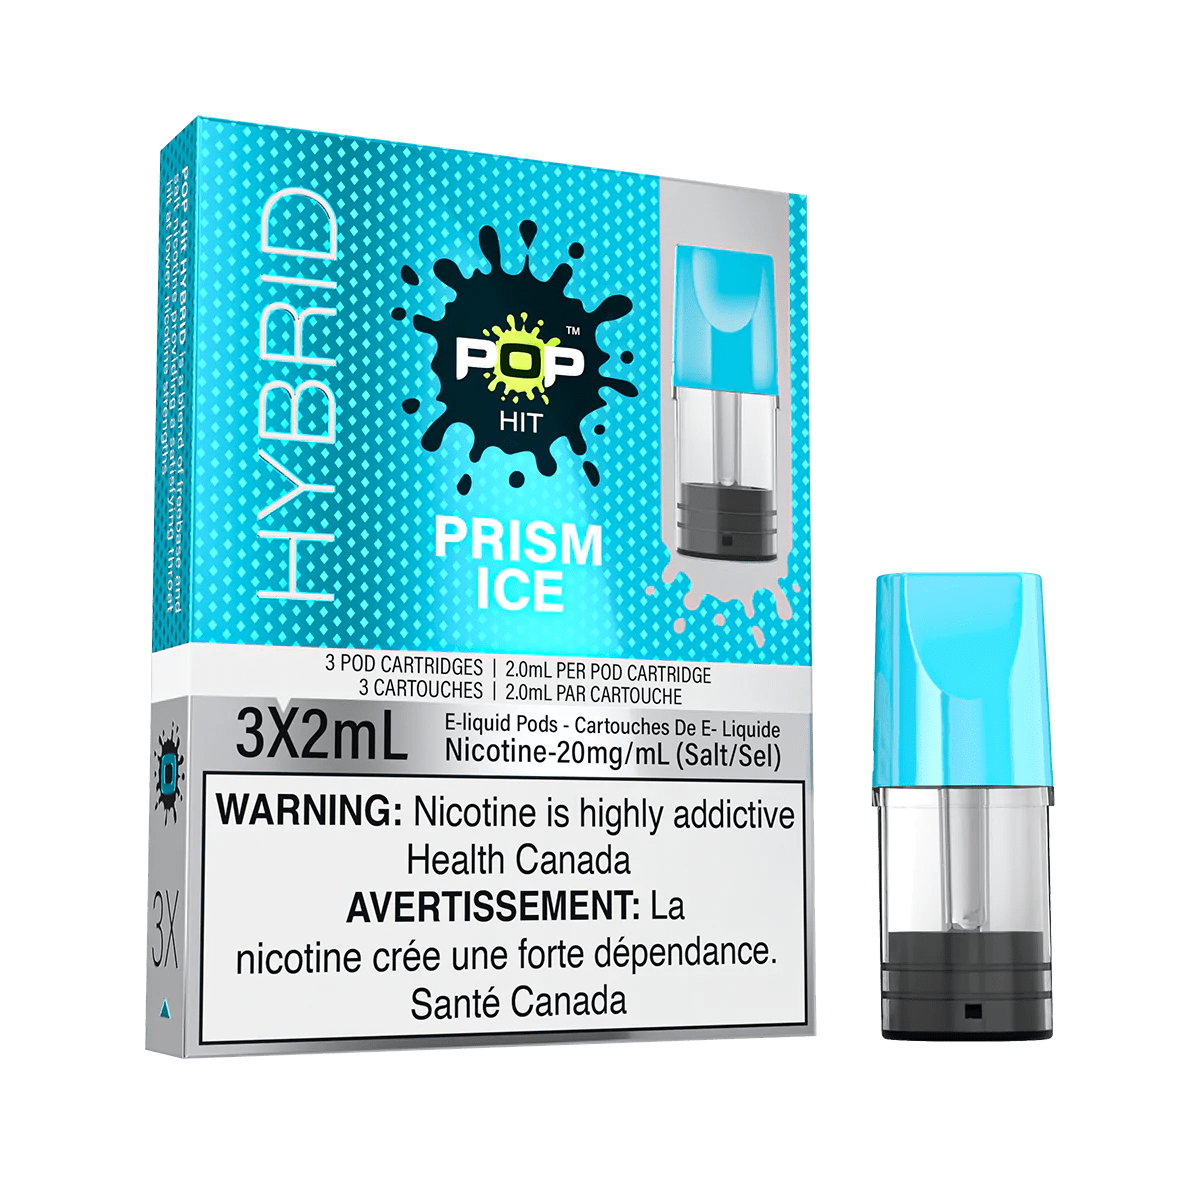 POP Hybrid Vape Pod - Prism Ice (Sktl Ice) available on Canada online vape shop